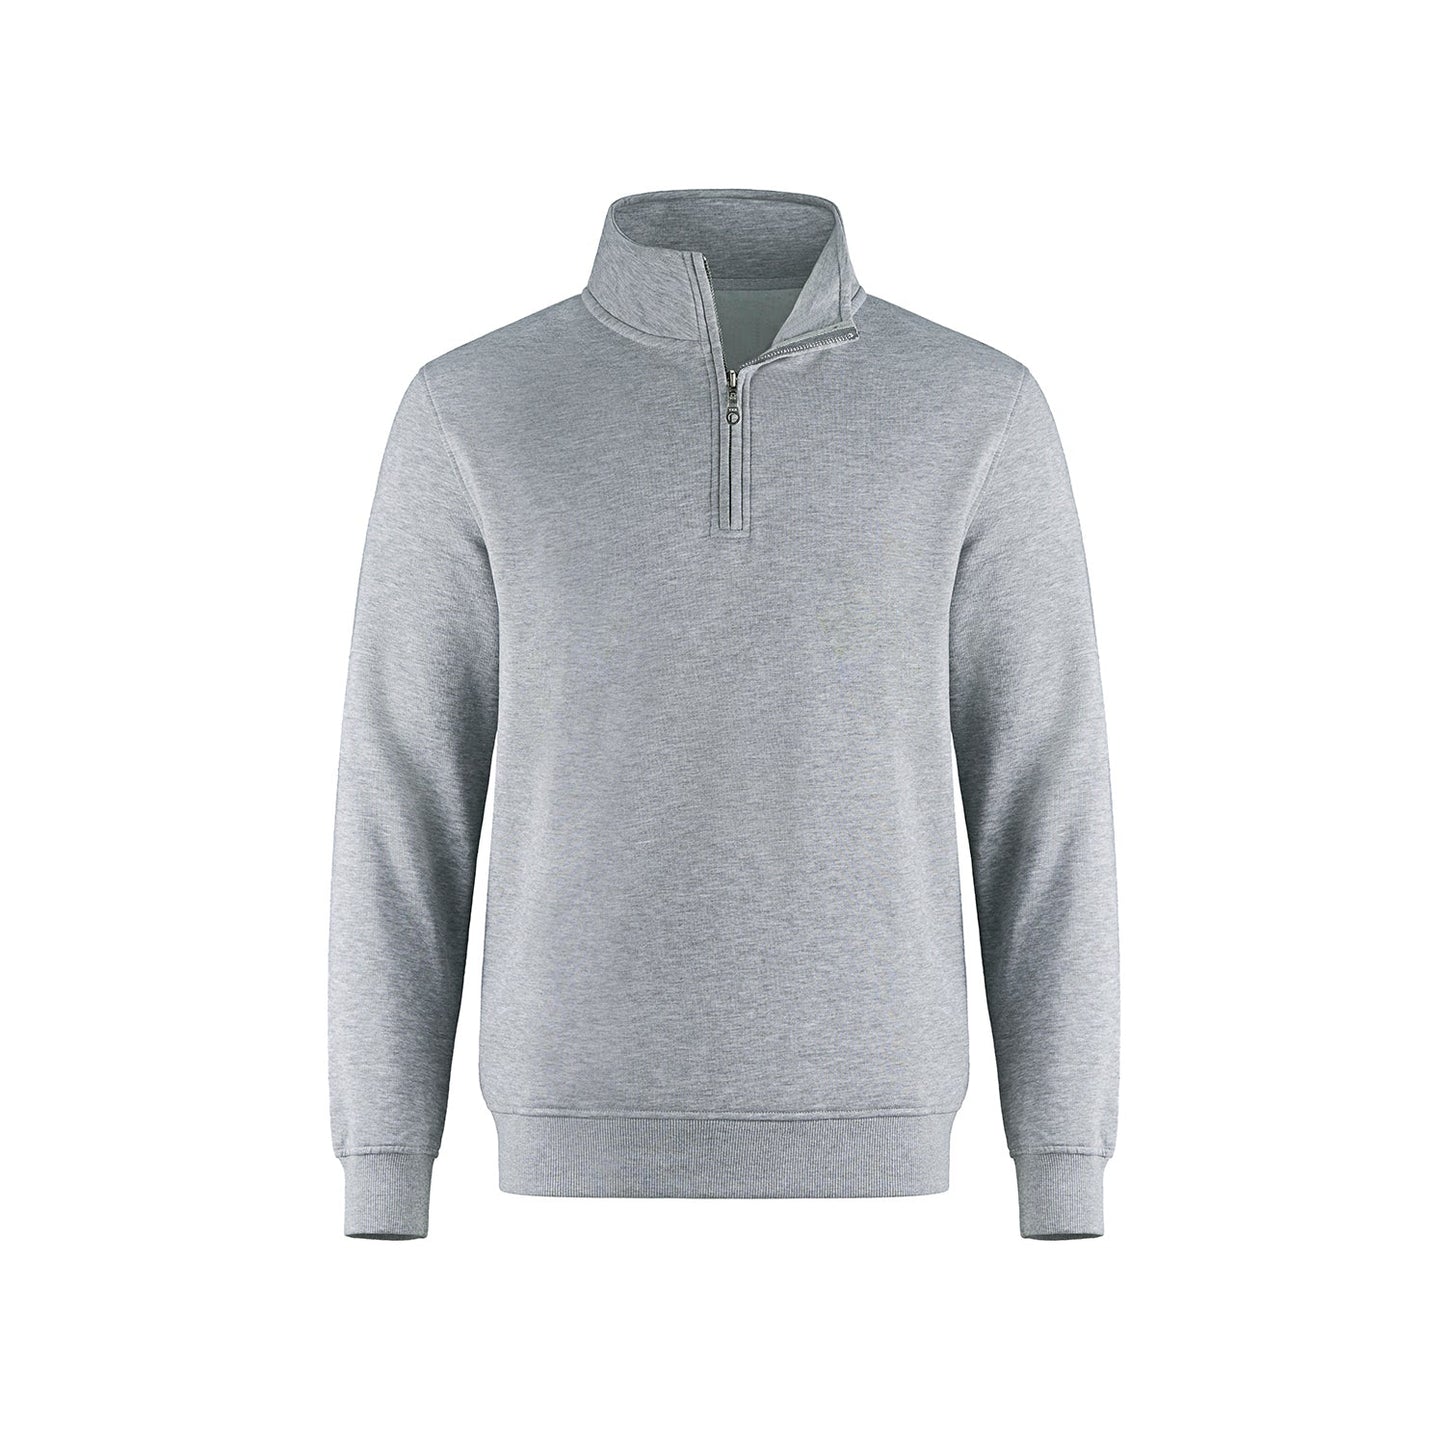 L00545 - Flux 1/4 zip Pullover Athletic Grey Heather / XS